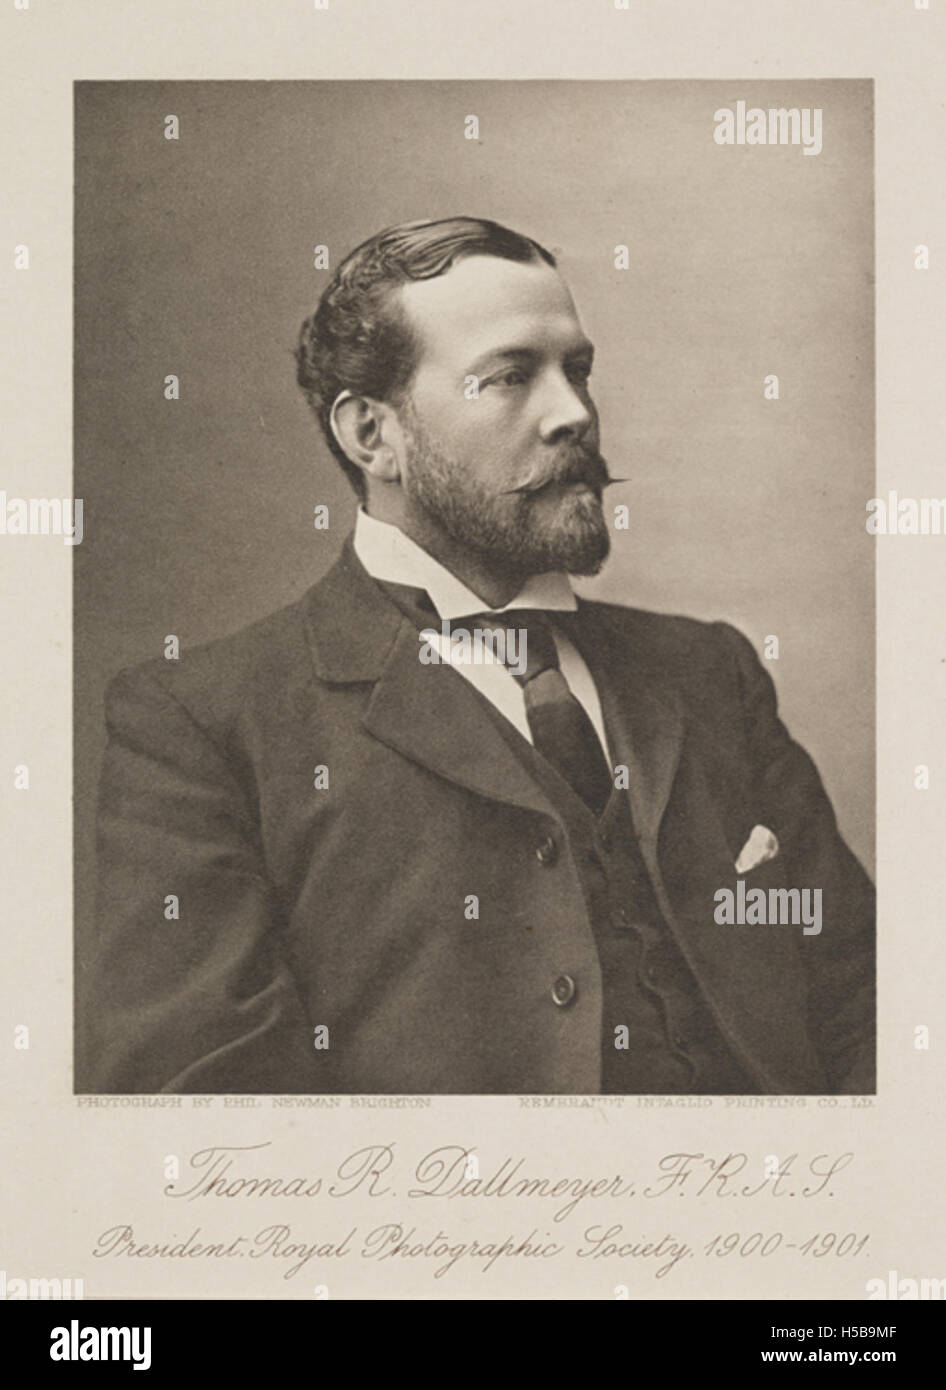 Thomas R. Dallmeyer. F.R.A.S. Präsident Royal Photographic Society, 1900-1901. Stockfoto